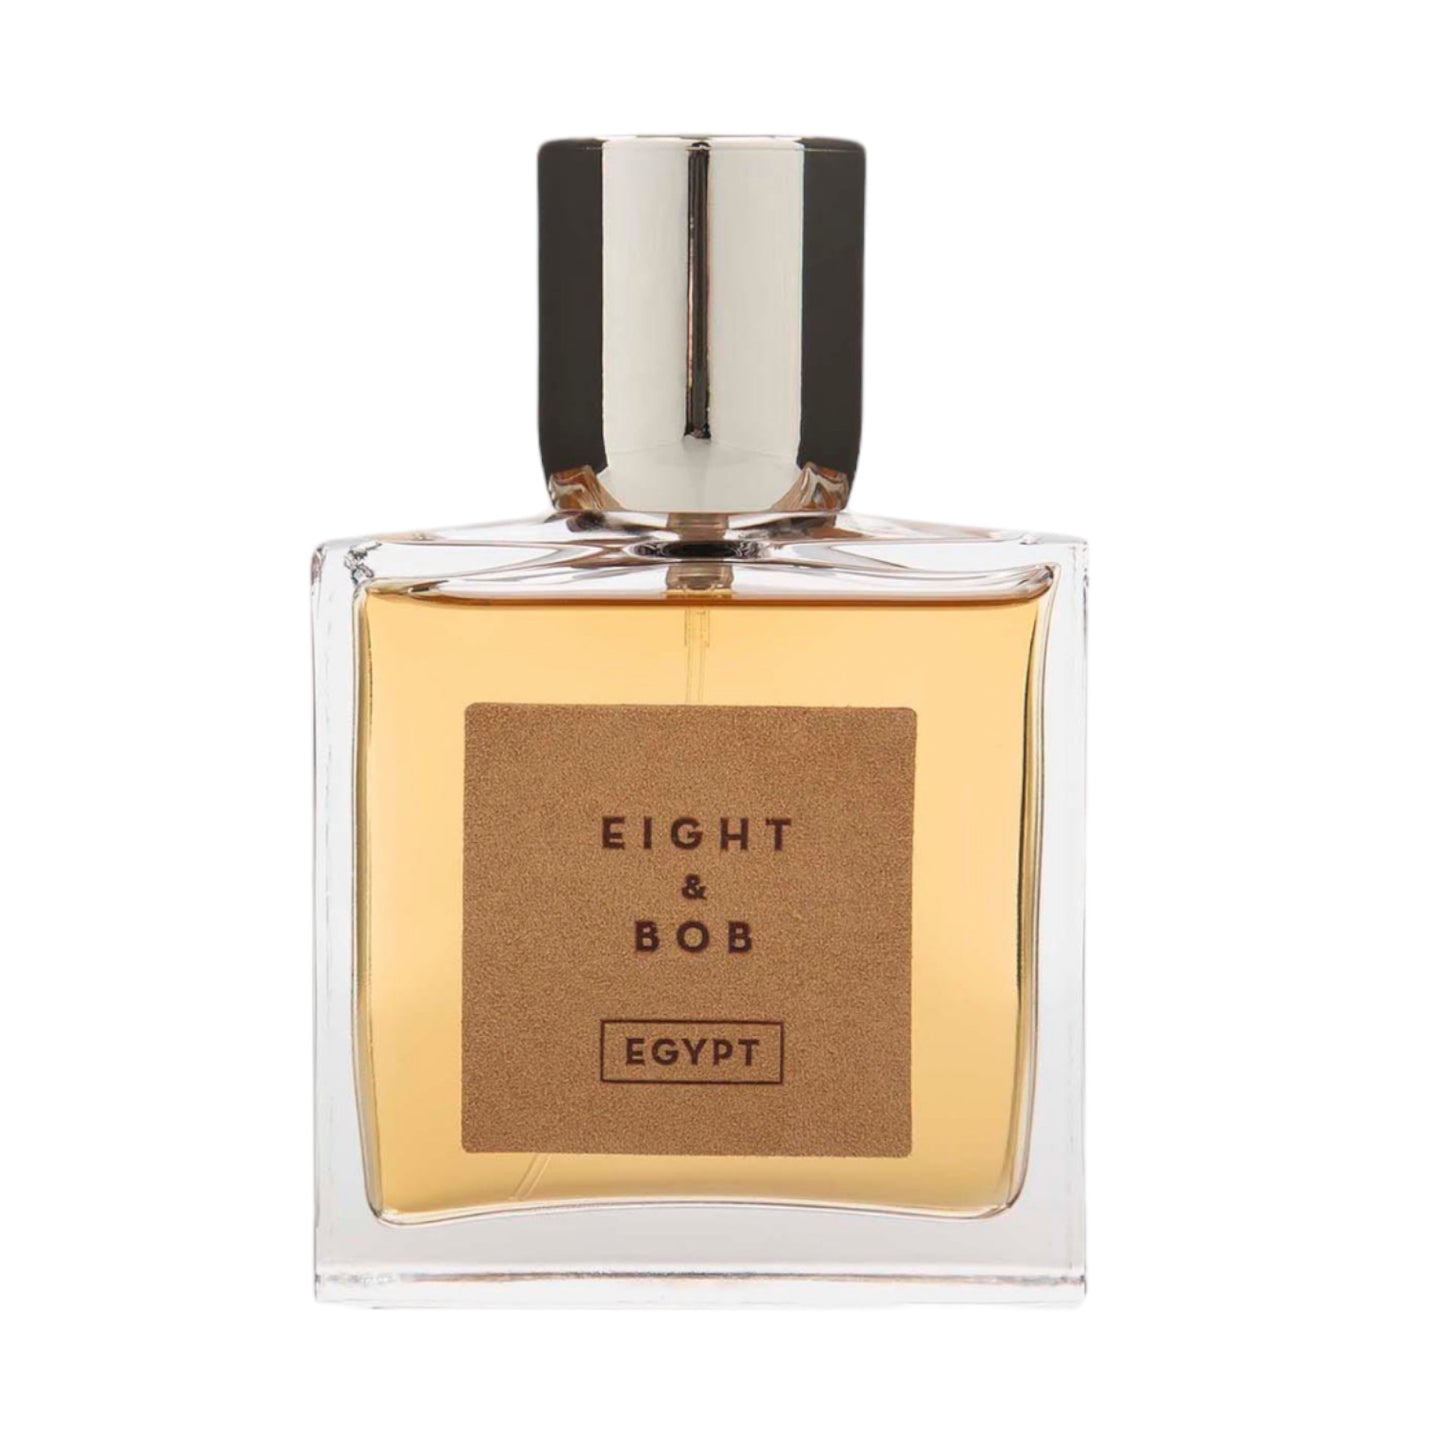 Egypt Eau De Parfum EIGHT & BOB